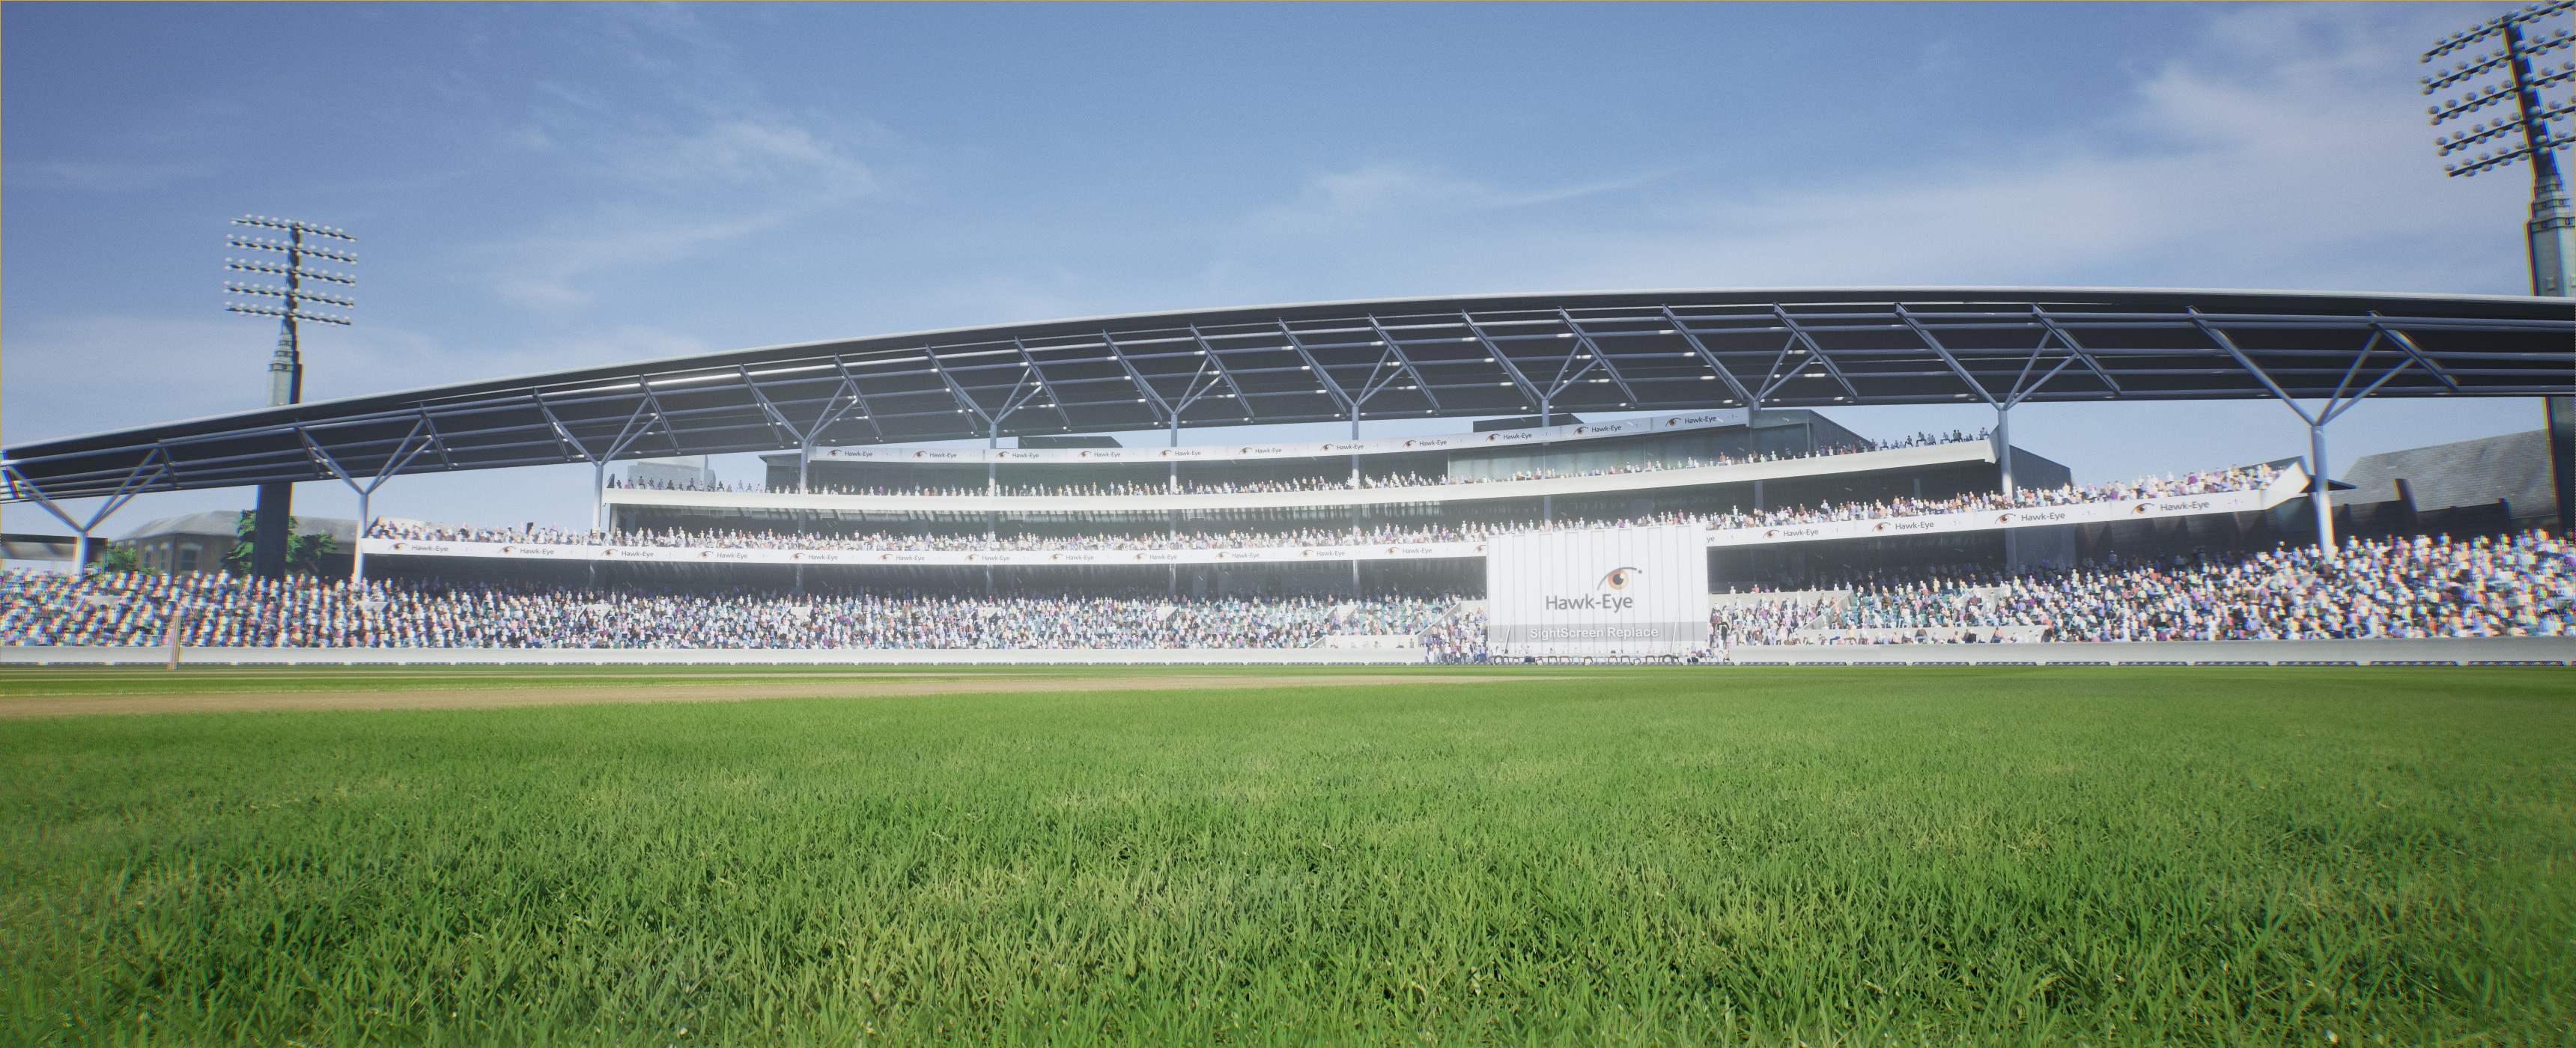 The Oval Stadium